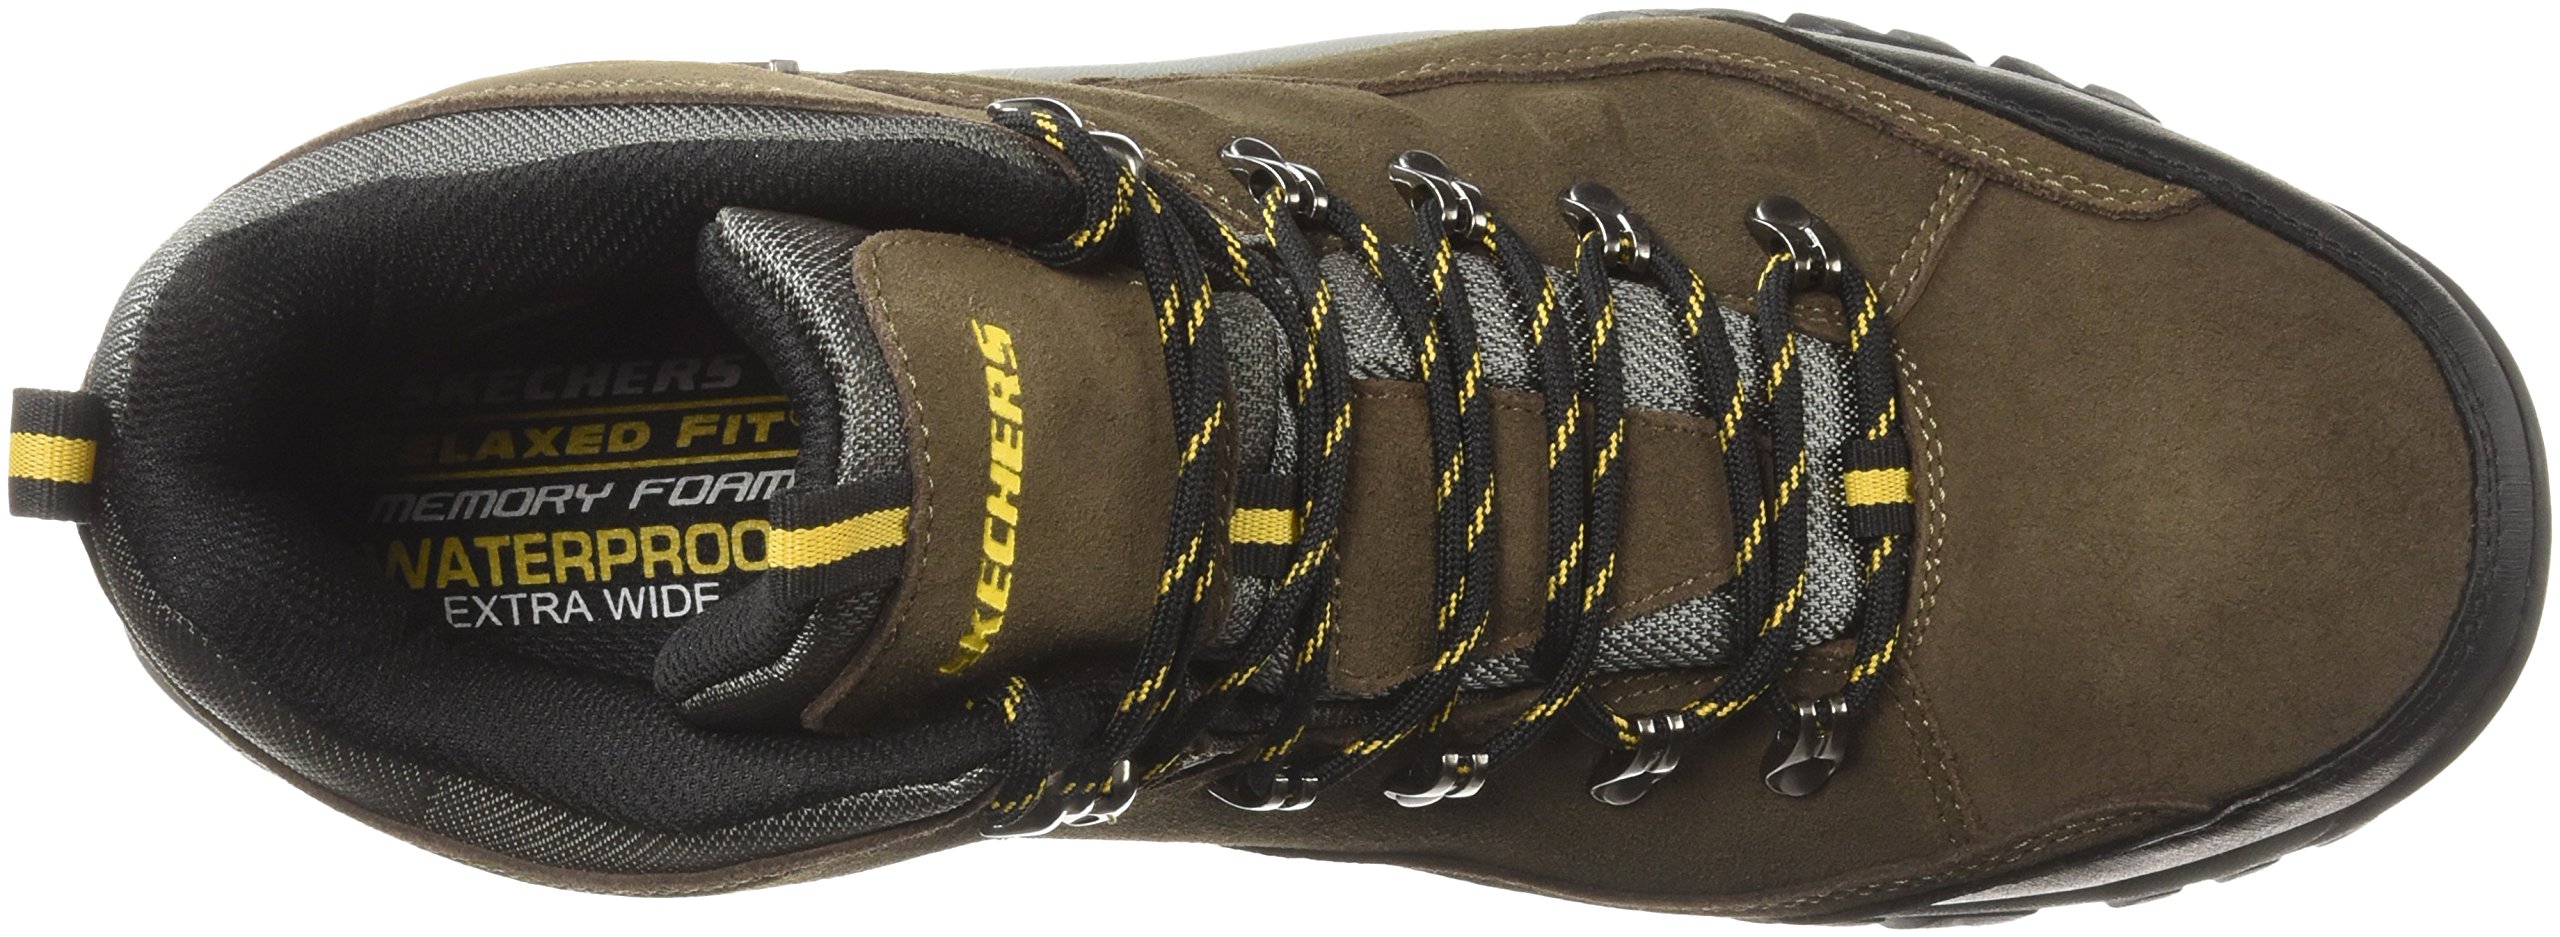 Skechers Men's Relment-Pelmo Hiking Boot